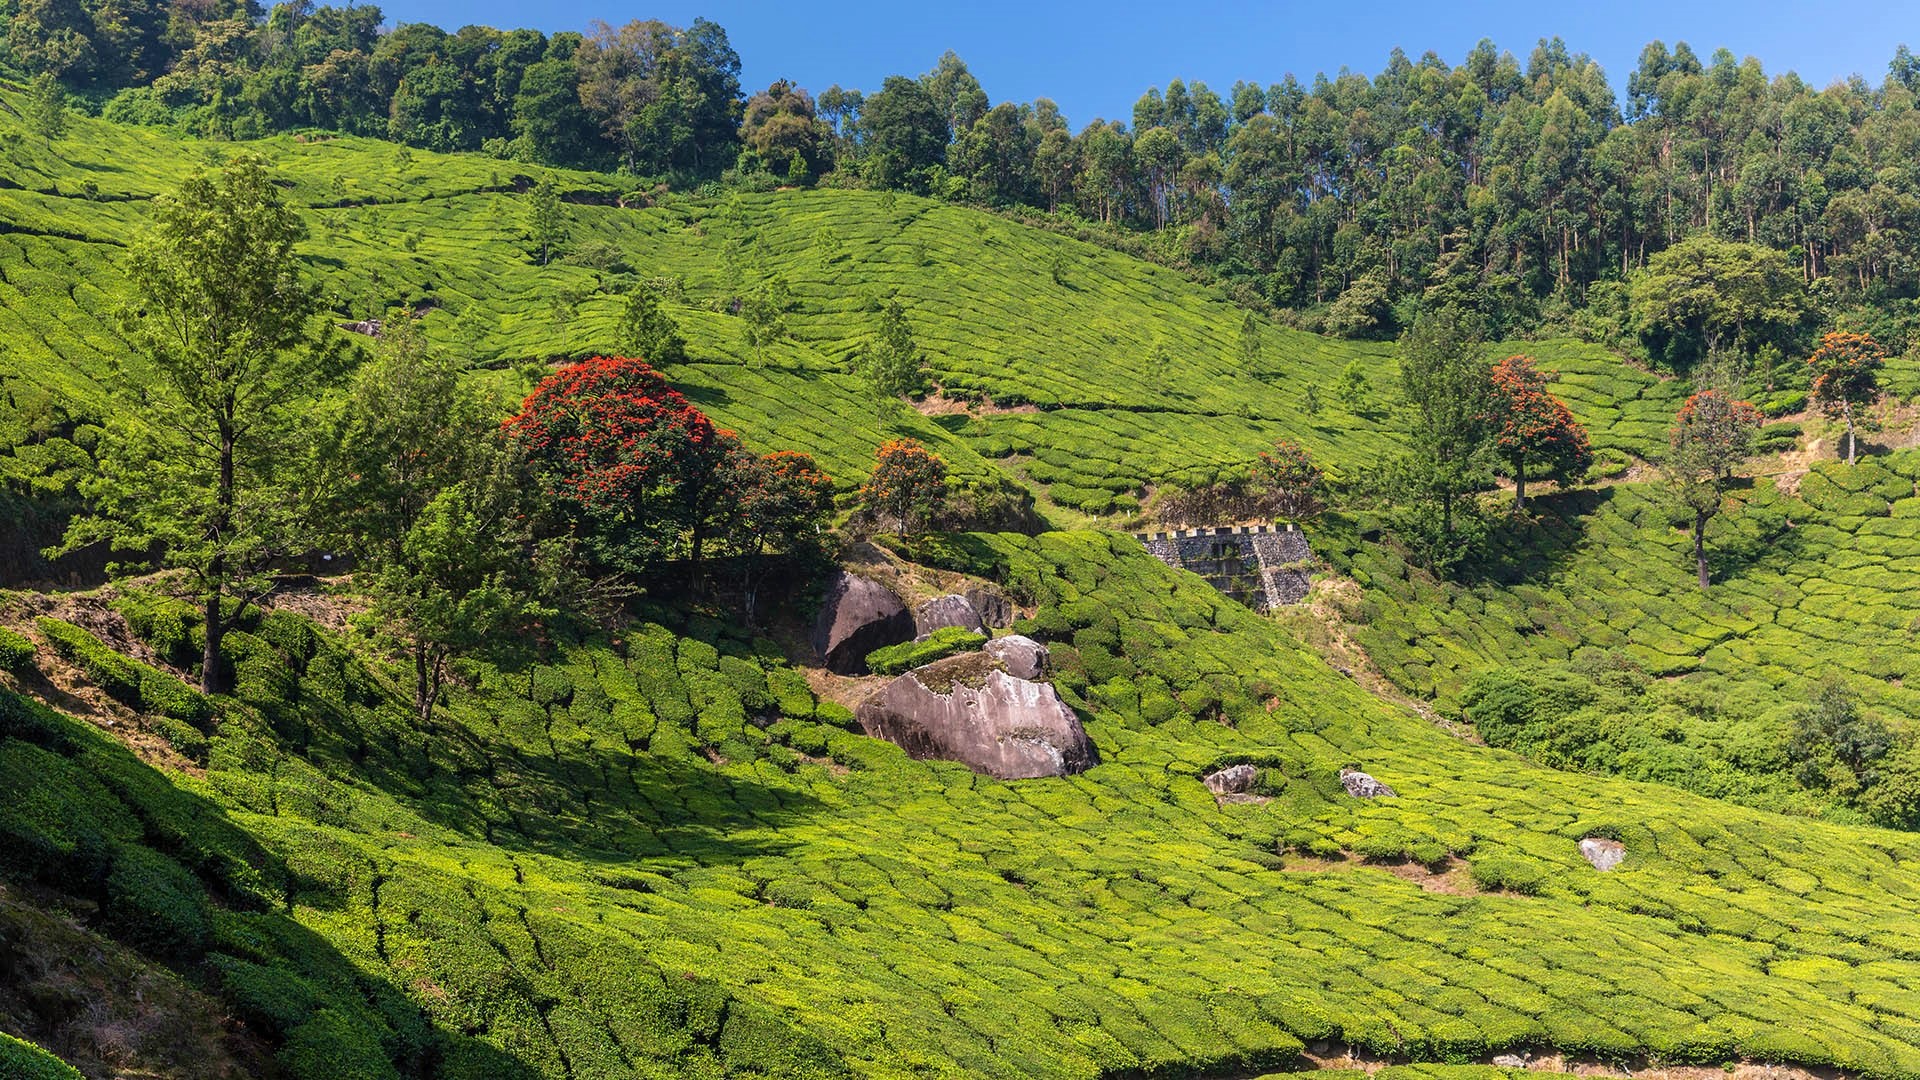 General 1920x1080 nature landscape trees field farm plants rocks sky tea plant Kerala India Munnar